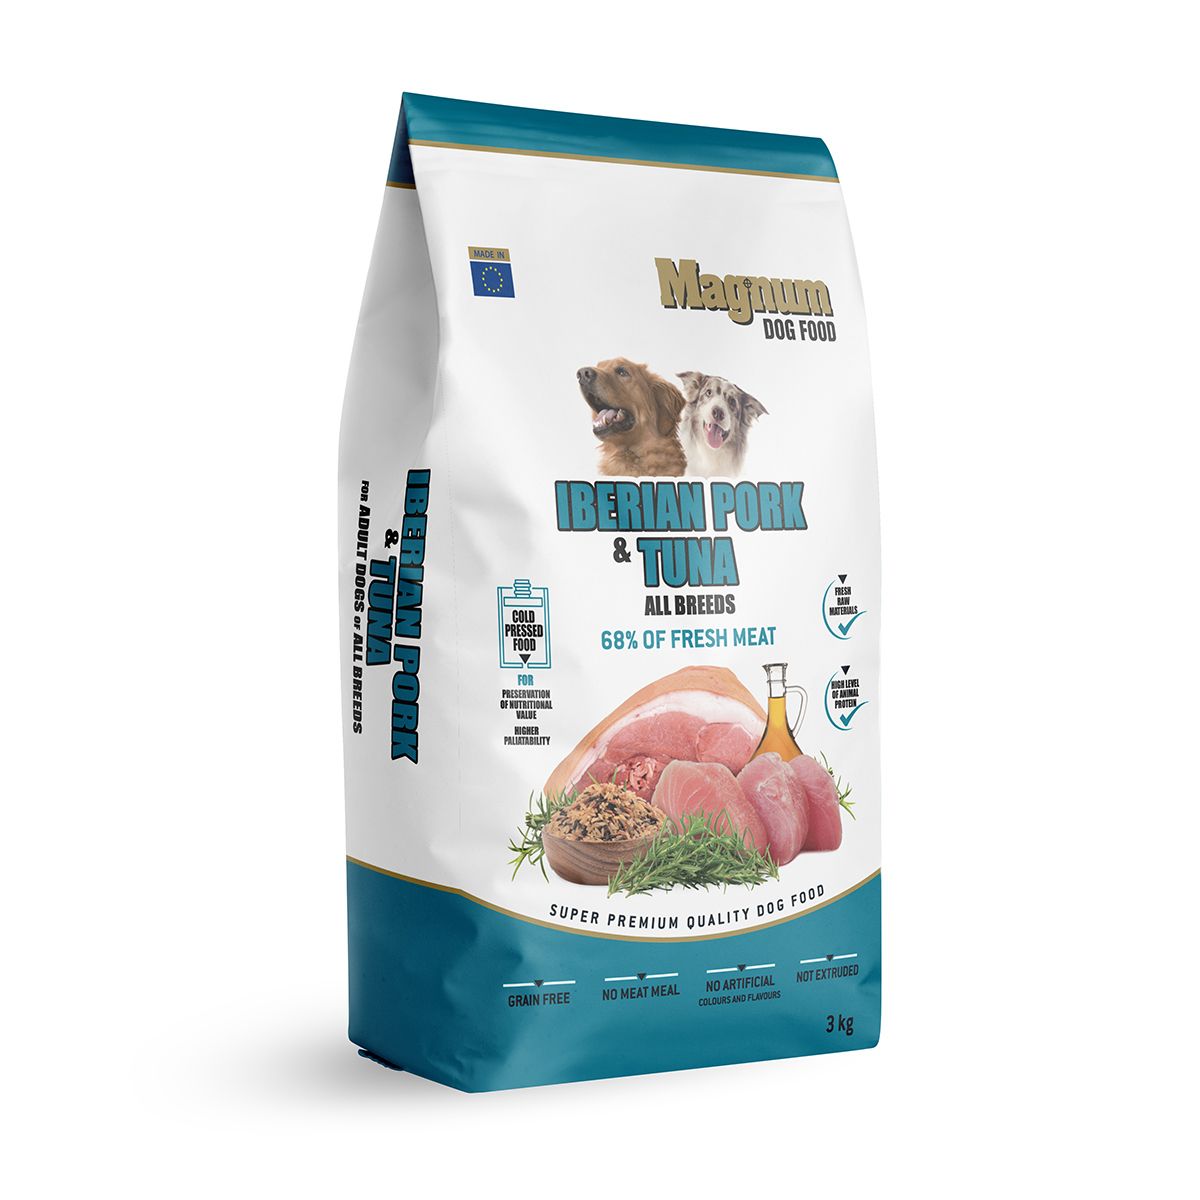 Magnum Iberian Pork & Tuna All Breed 3kg Magnum dog food